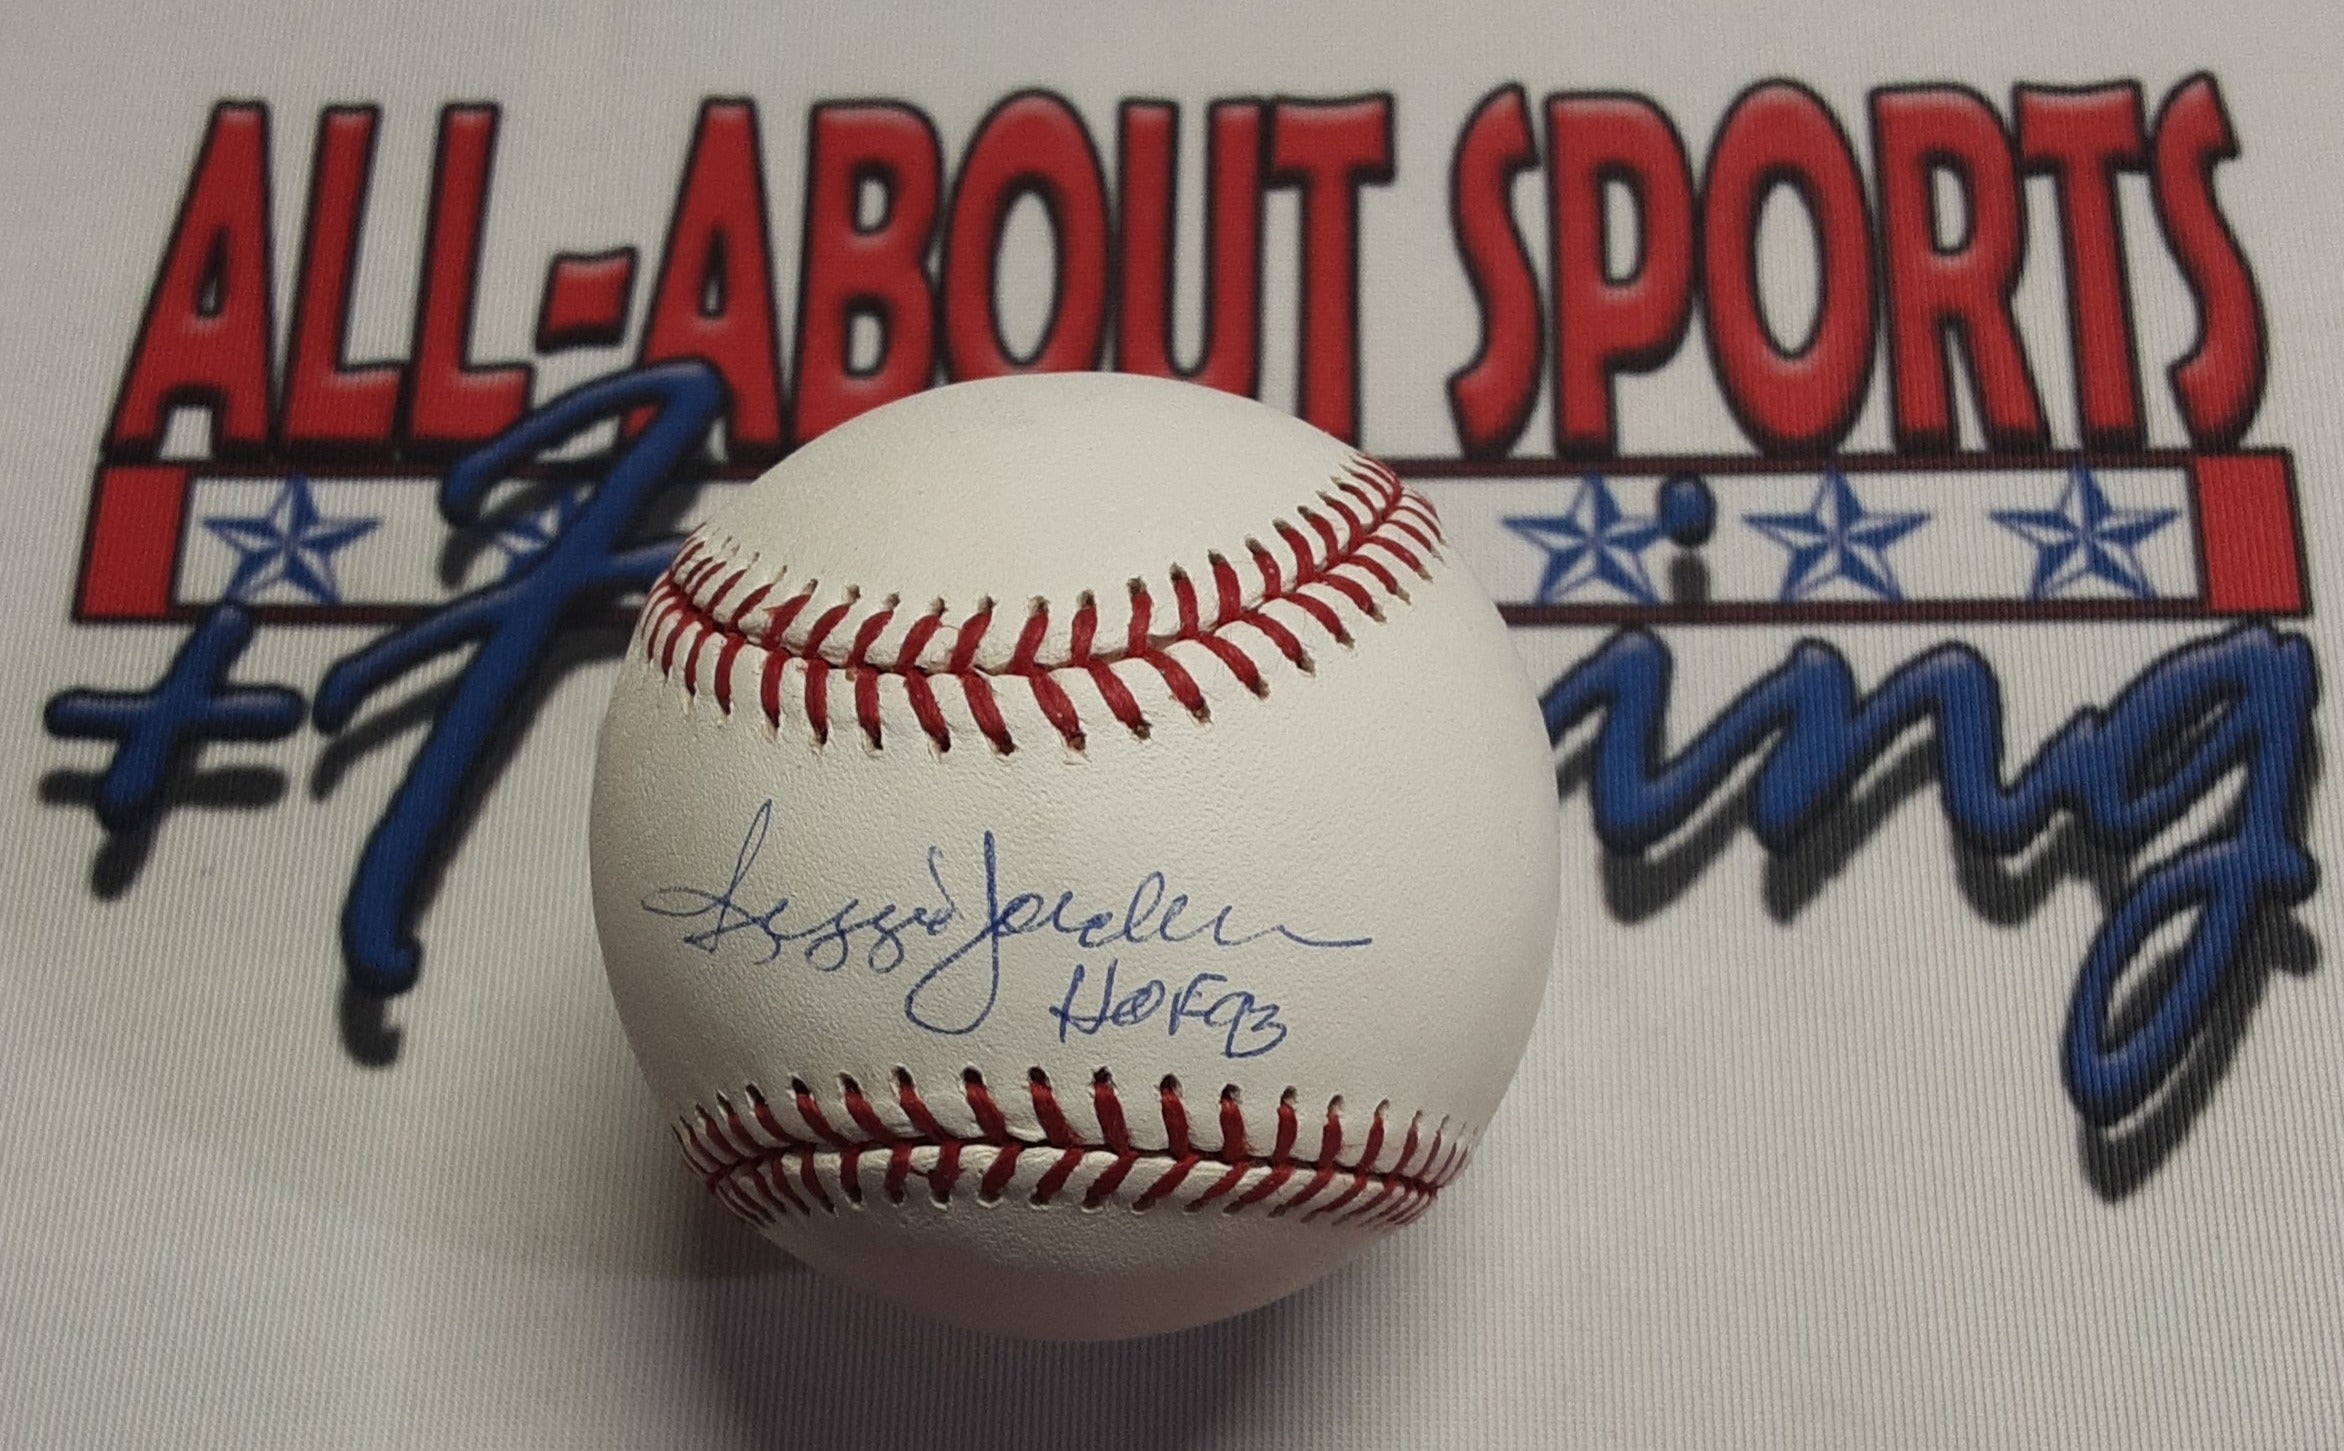 Reggie Jackson Authentic Signed Baseball Autographed with Inscription JSA/SM.